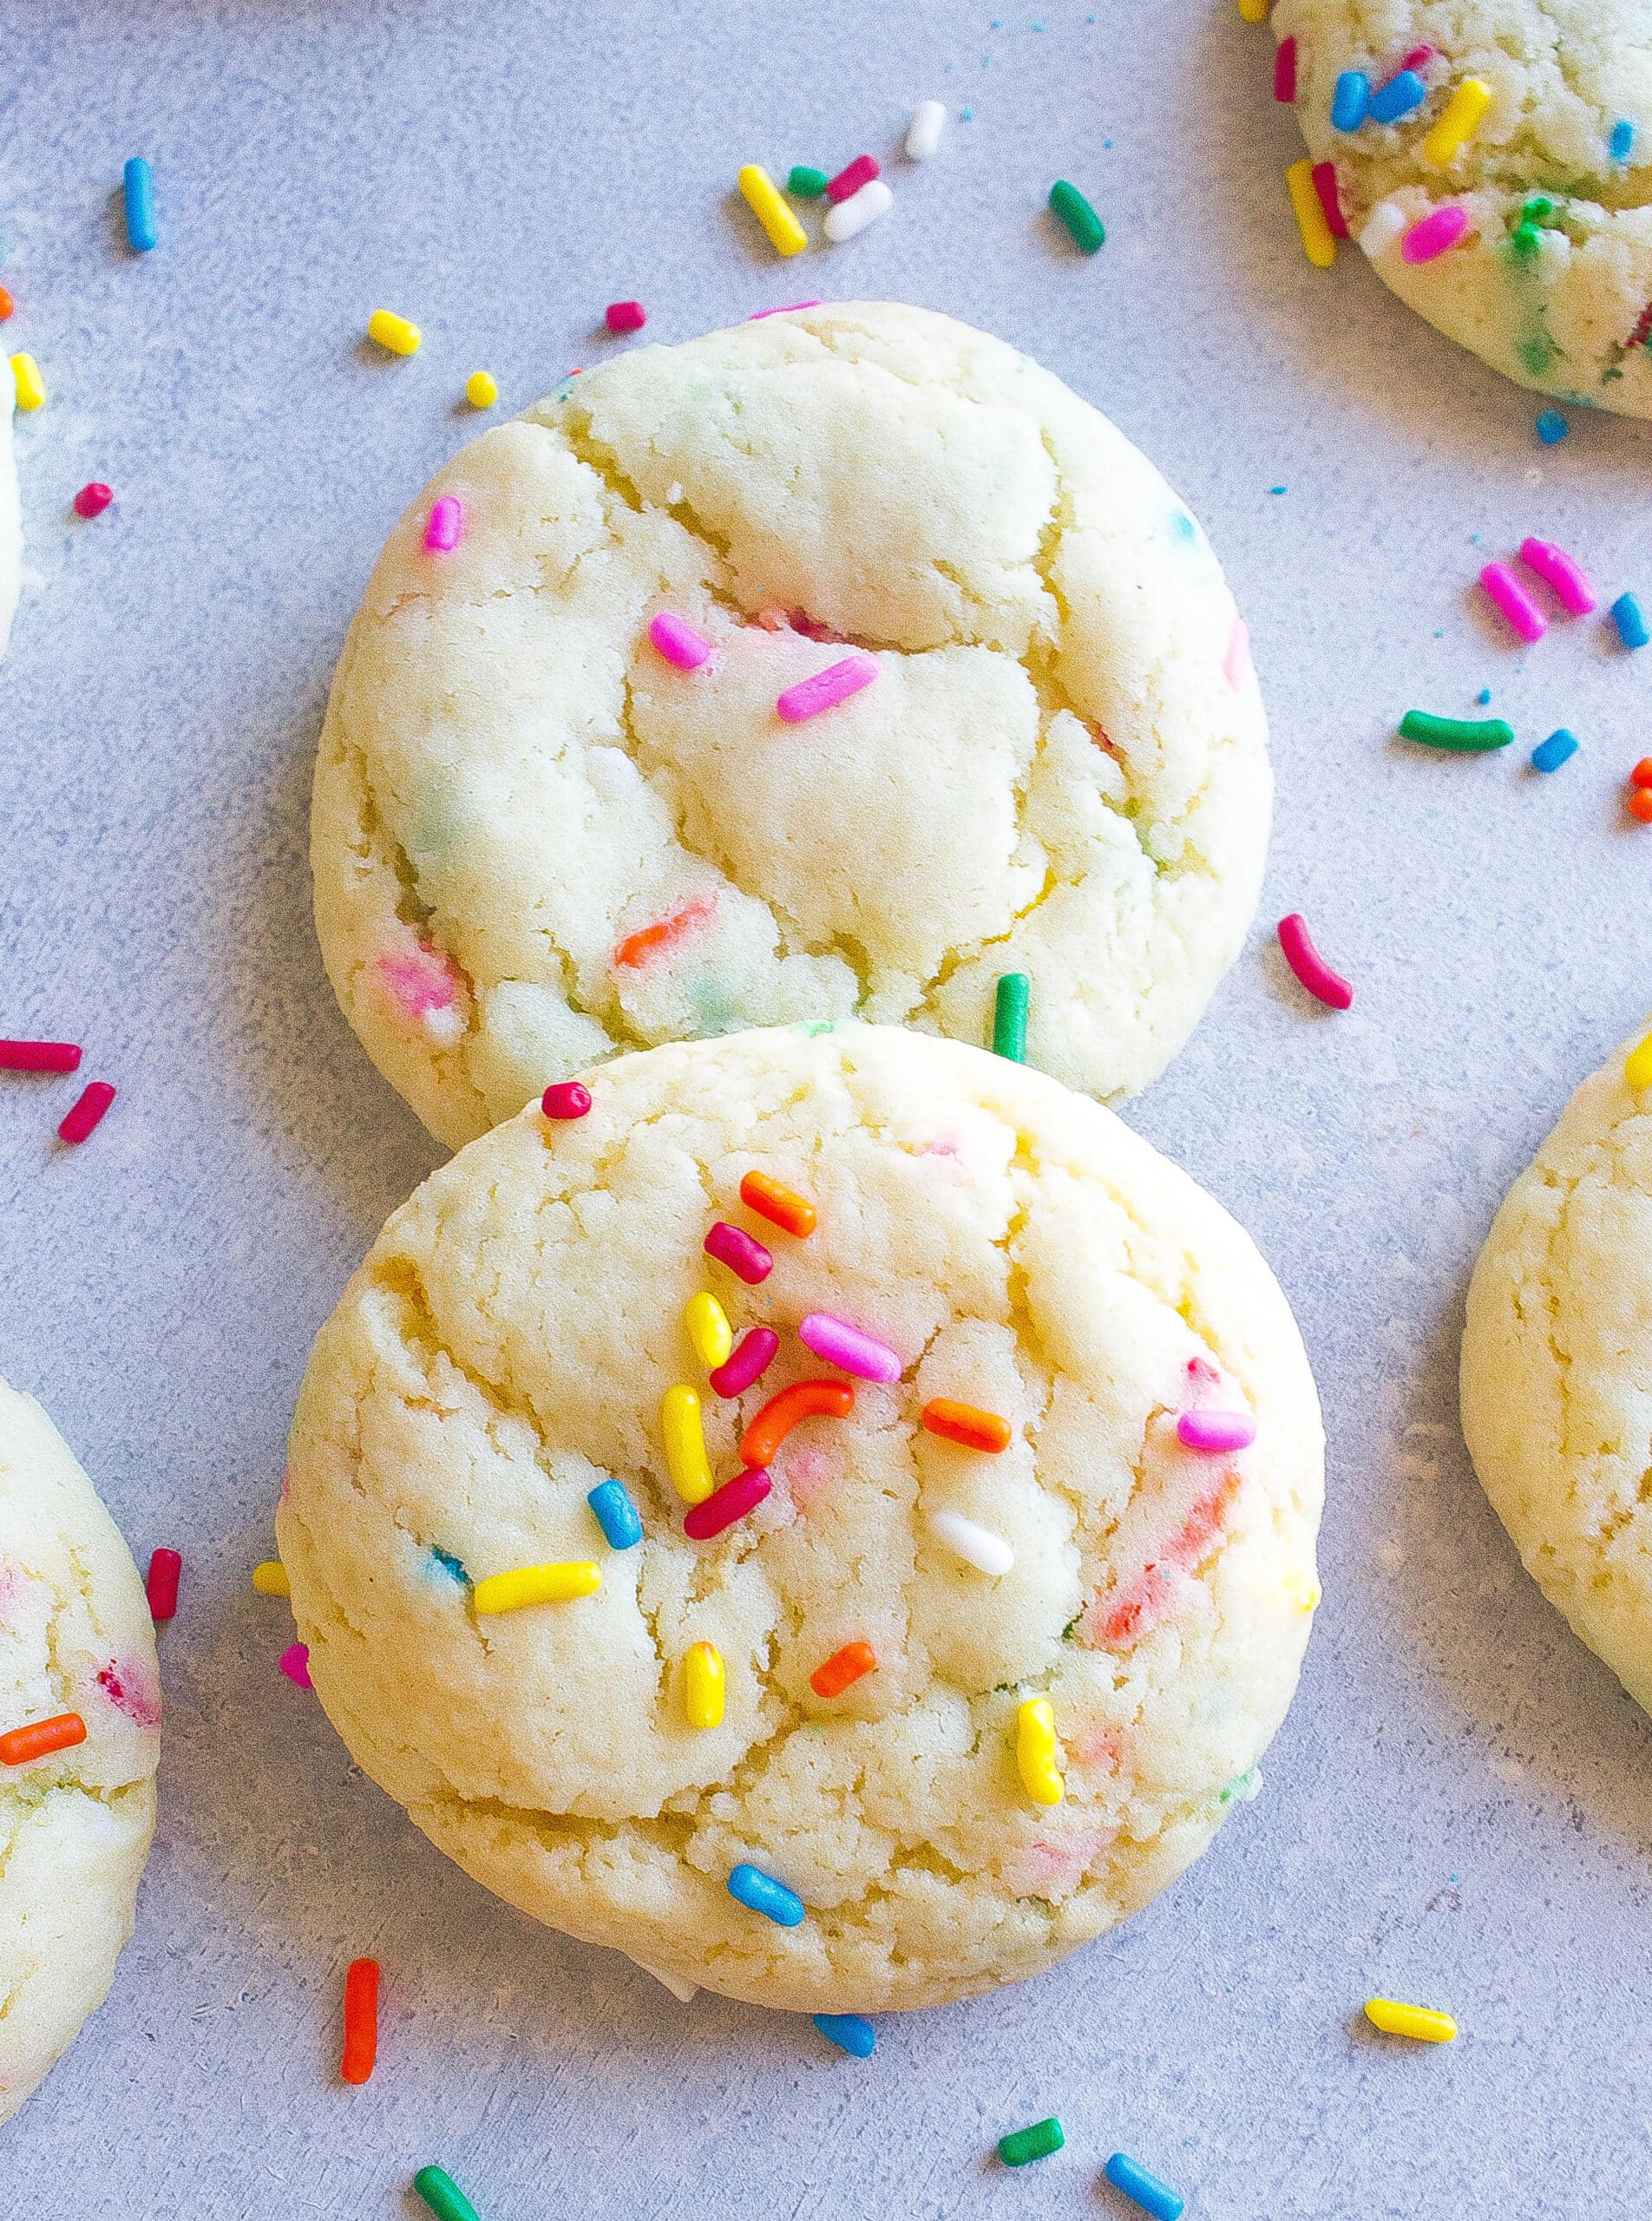 Cake cookies with sprinkles.